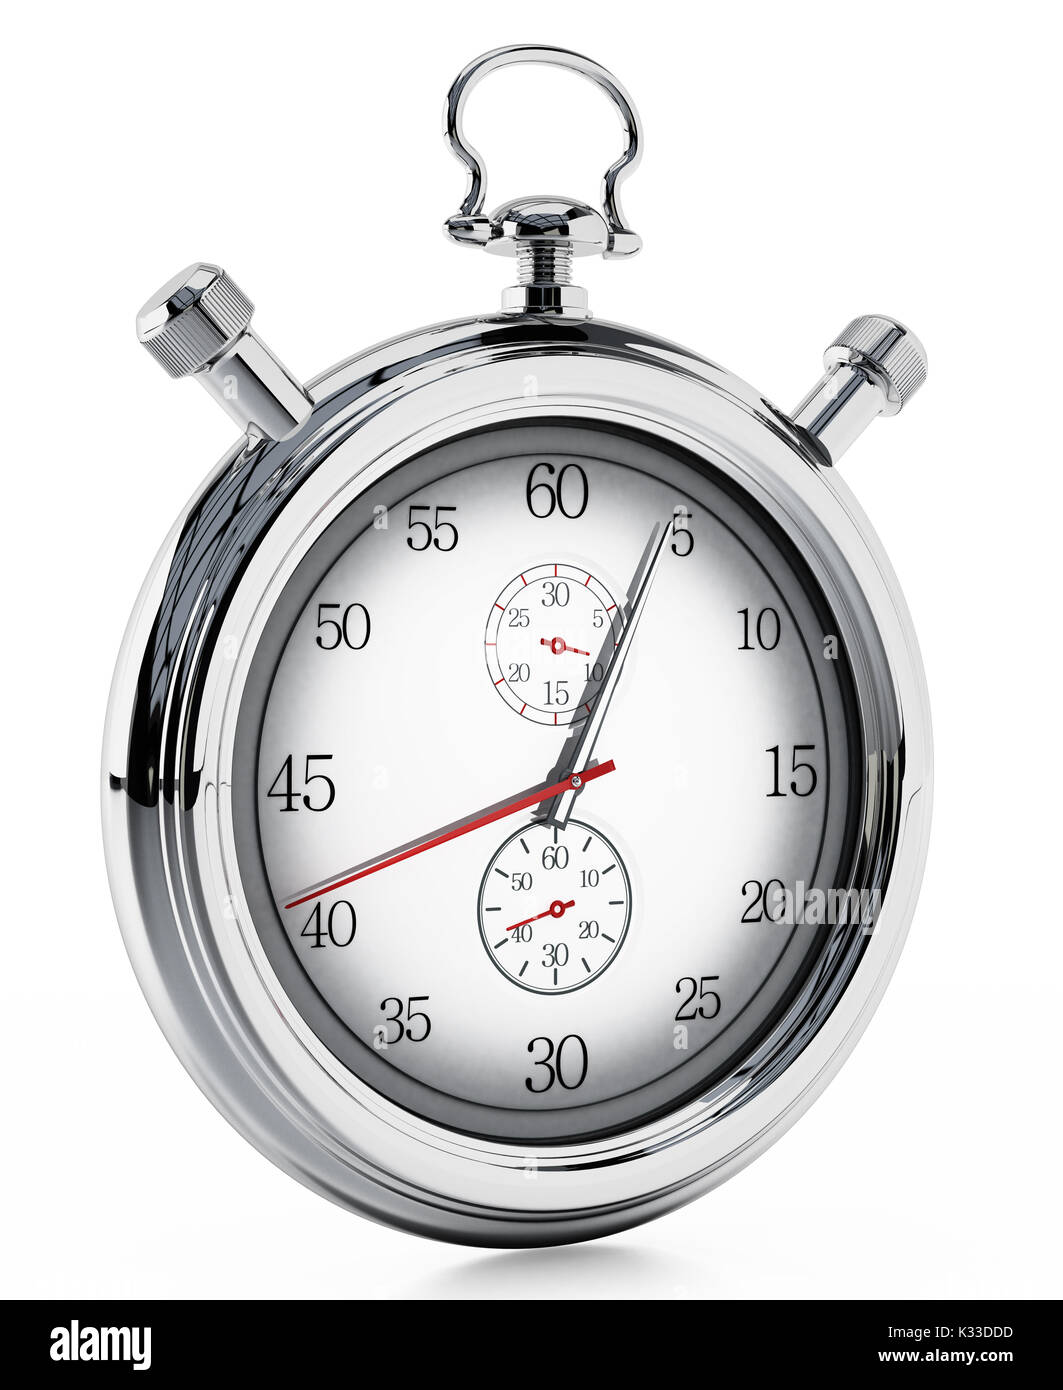 Fictitious analogue chronometer isolated on white background. 3D illustration. Stock Photo